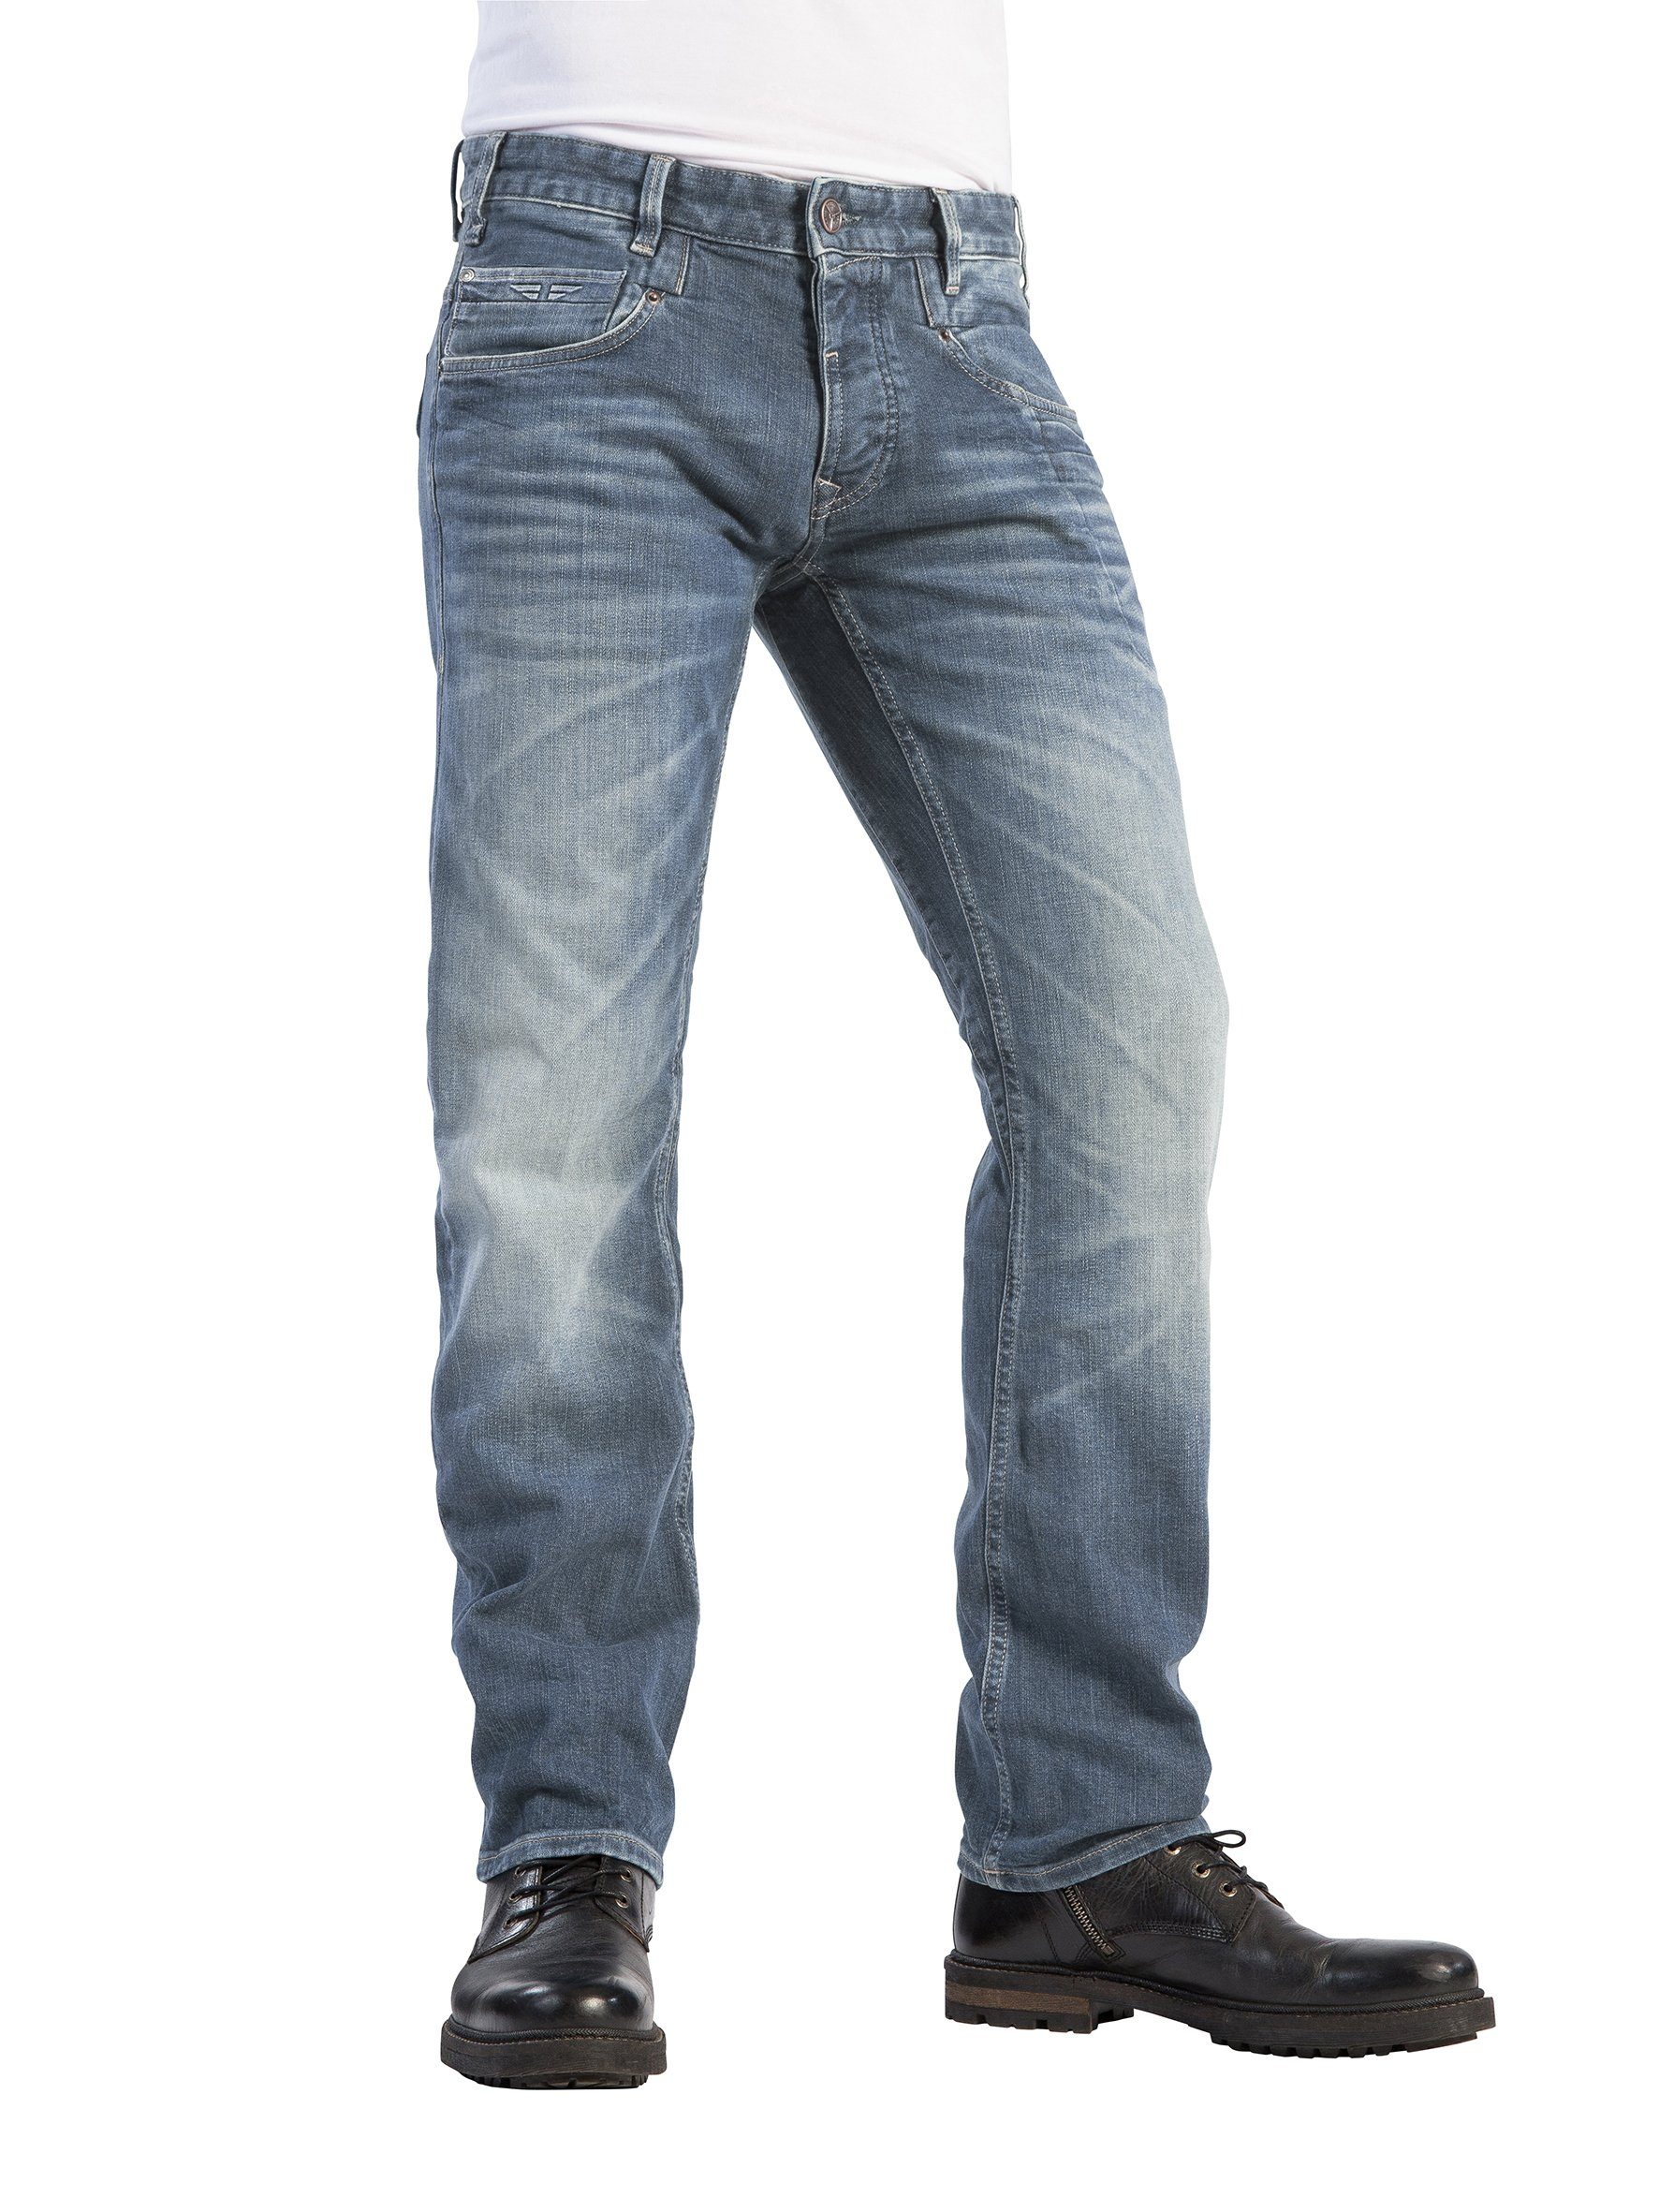 HERO by John Medoox 5-Pocket-Jeans Denim bluegrey Fit Relaxed Baxter